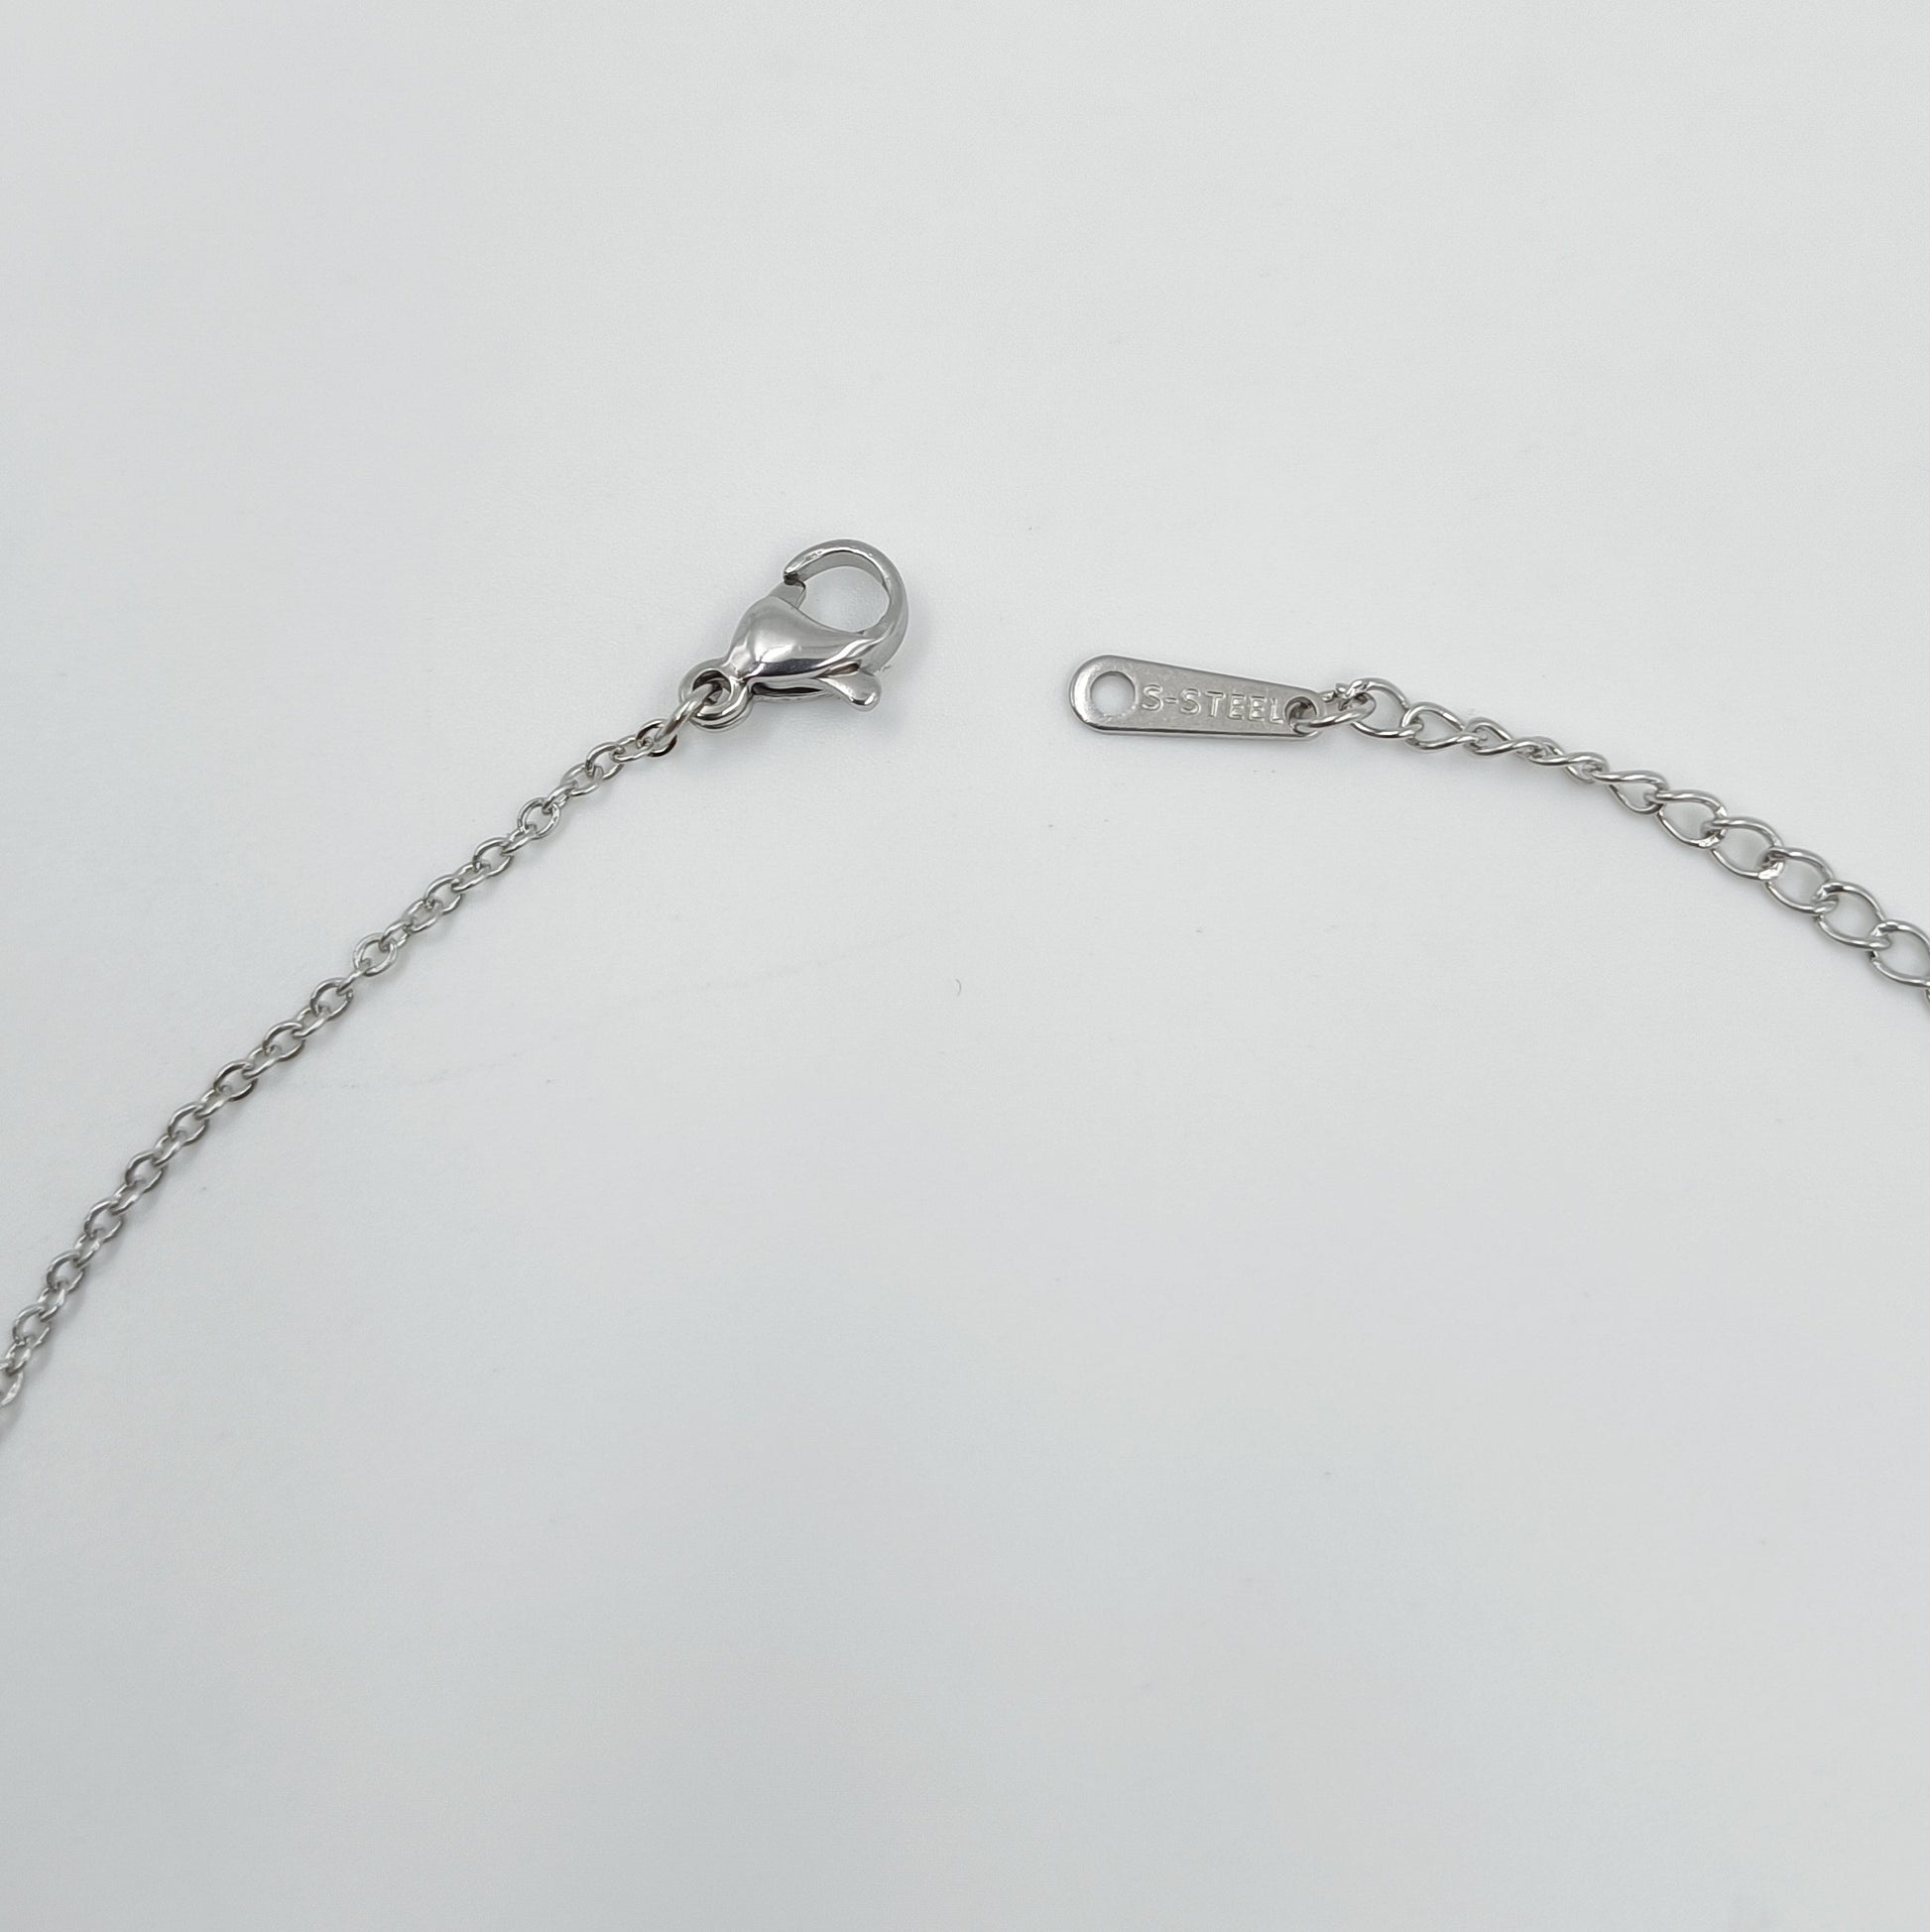 Attractive Drop designer Chain Pendant set Shree Radhe Pearls